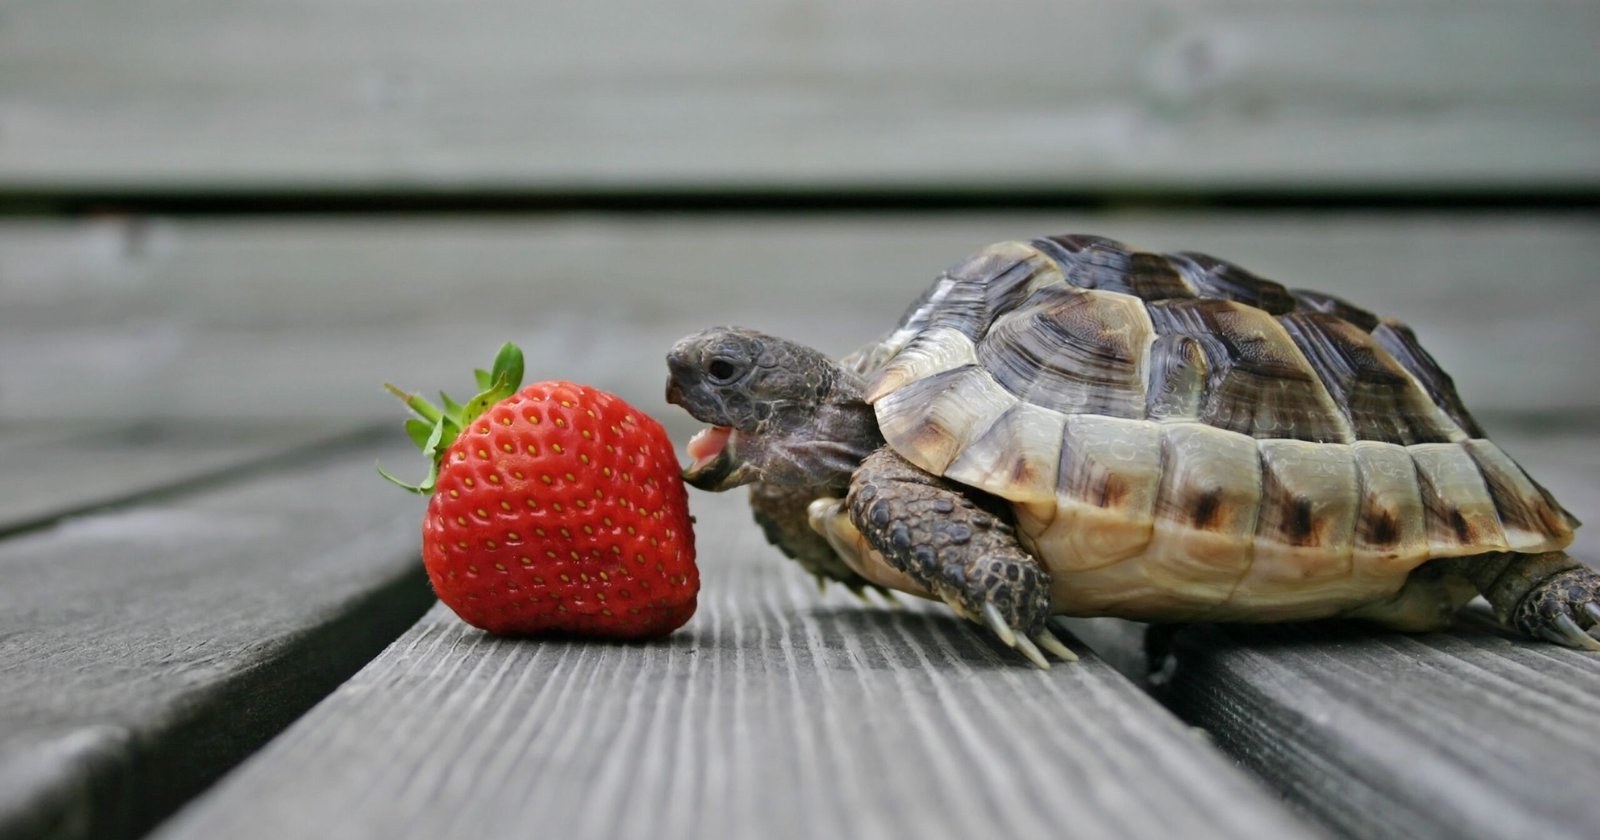 Can Turtles Eat Strawberries